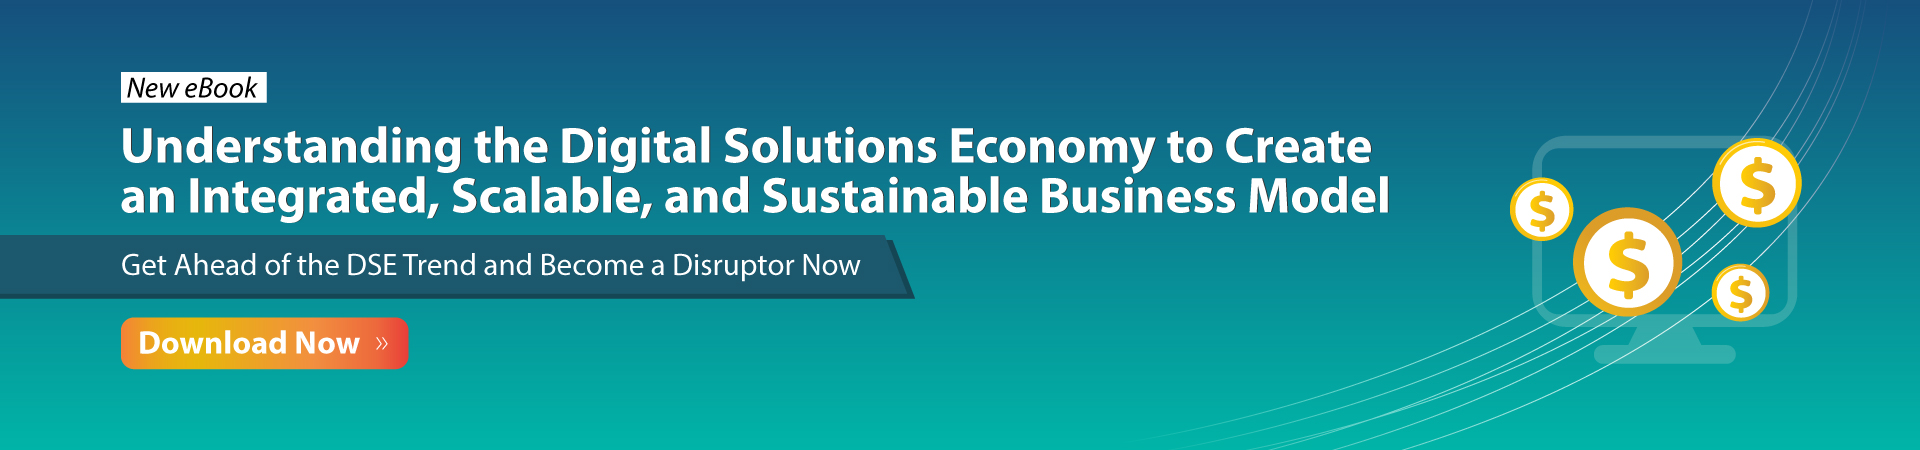 Understanding the Digital Solutions Economy banner